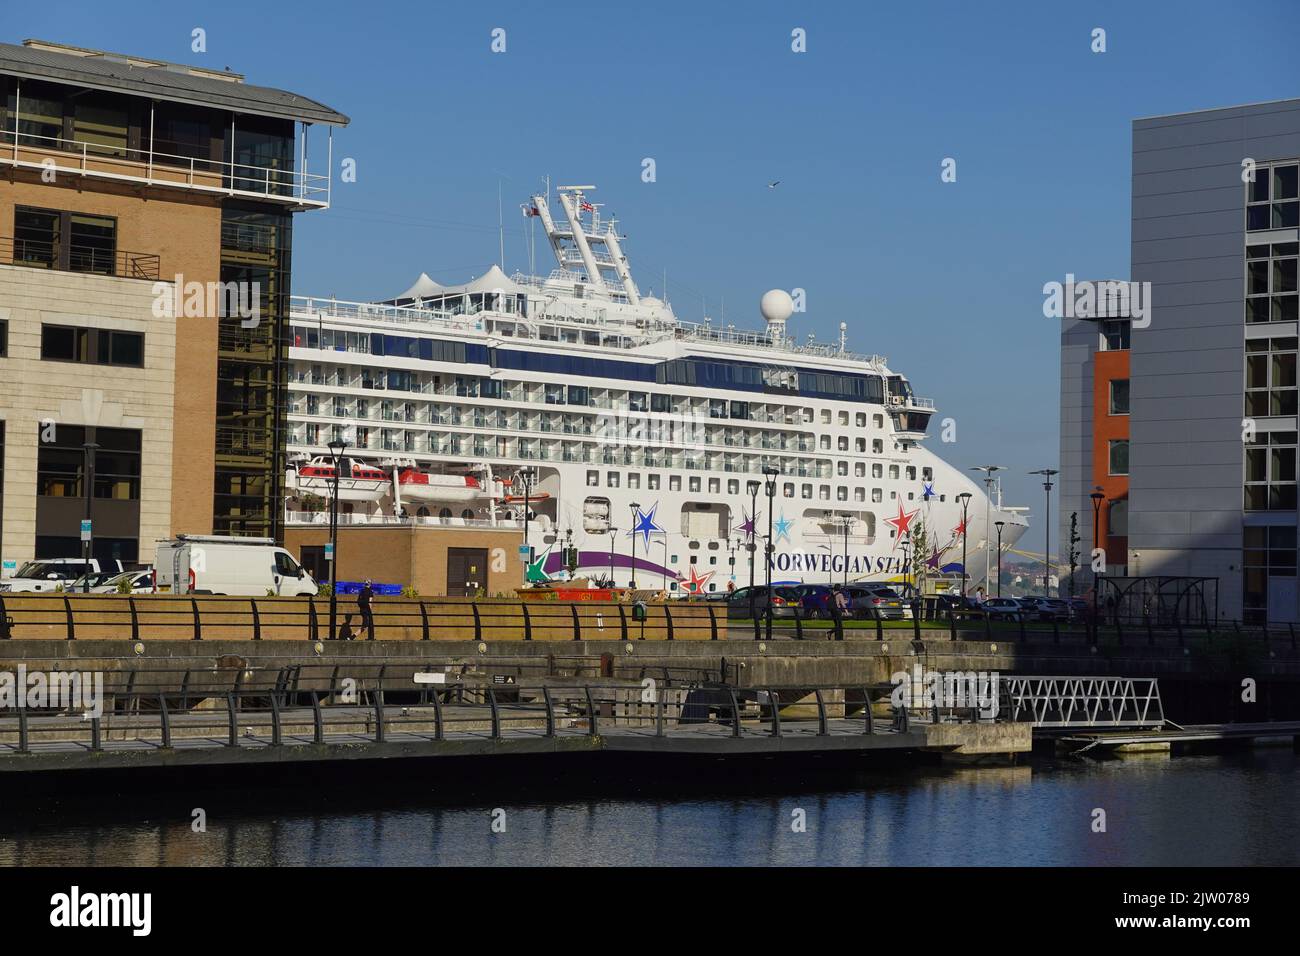 Norwegian Star Cruise liner, River Mersey, Liverpool, Merseyside, United Kingdom Stock Photo